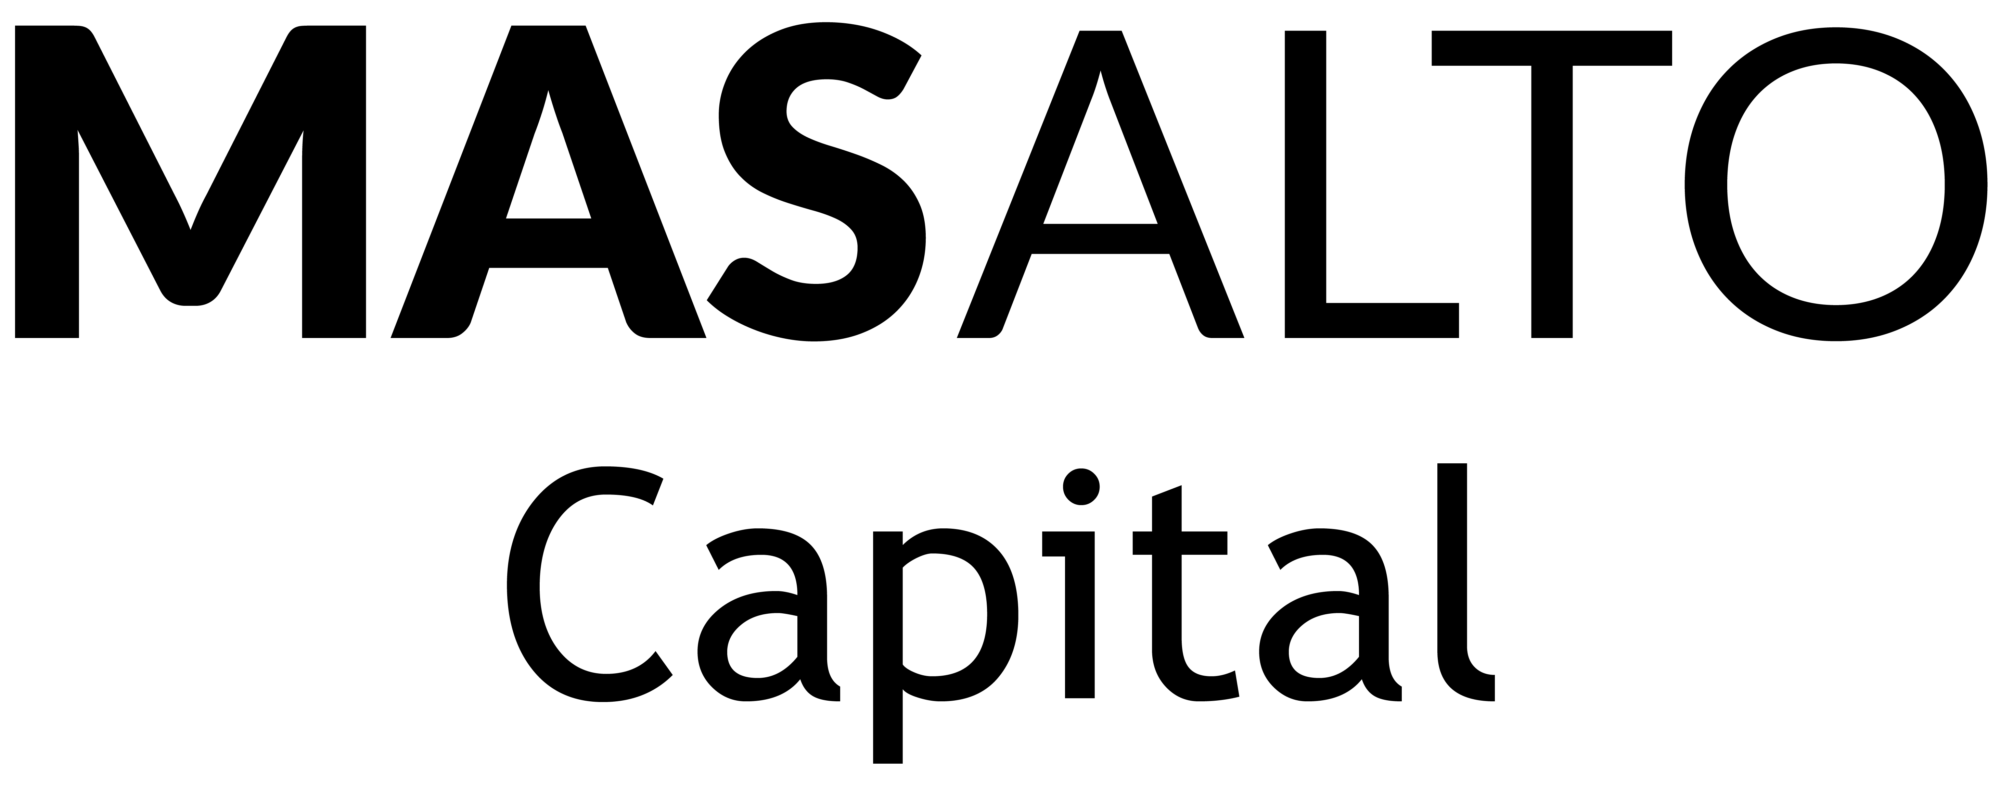 masalto black logo